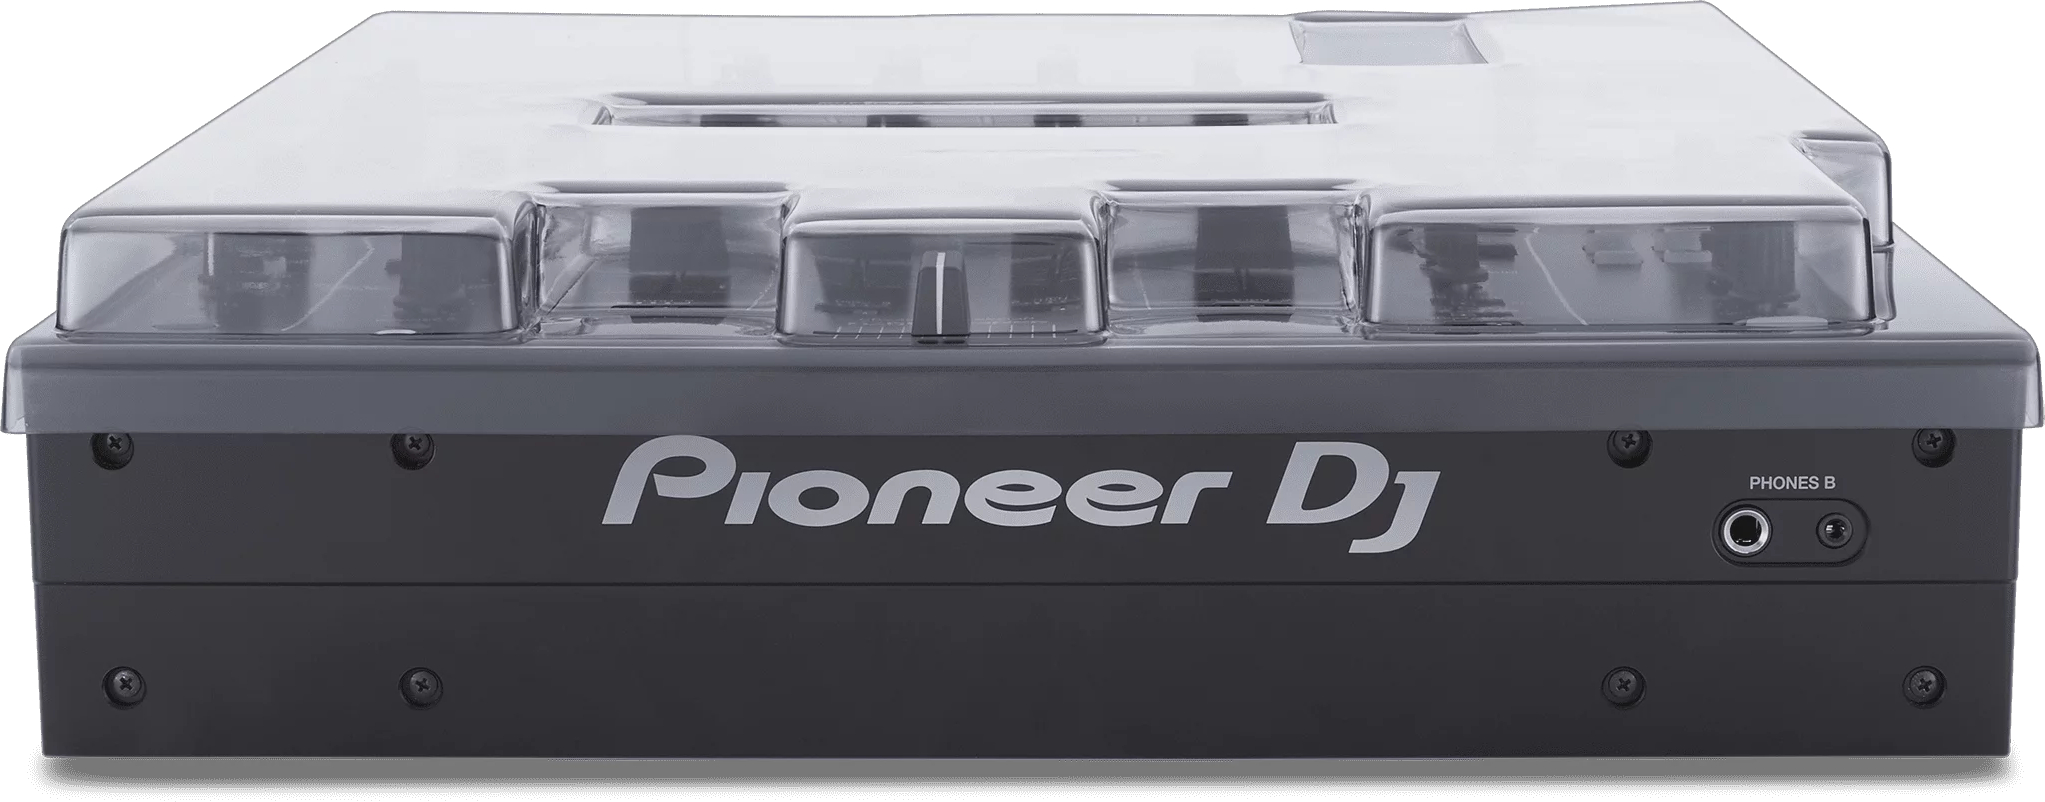 Decksaver Pioneer Dj Djm-a9 Cover - Housse Dj - Variation 2